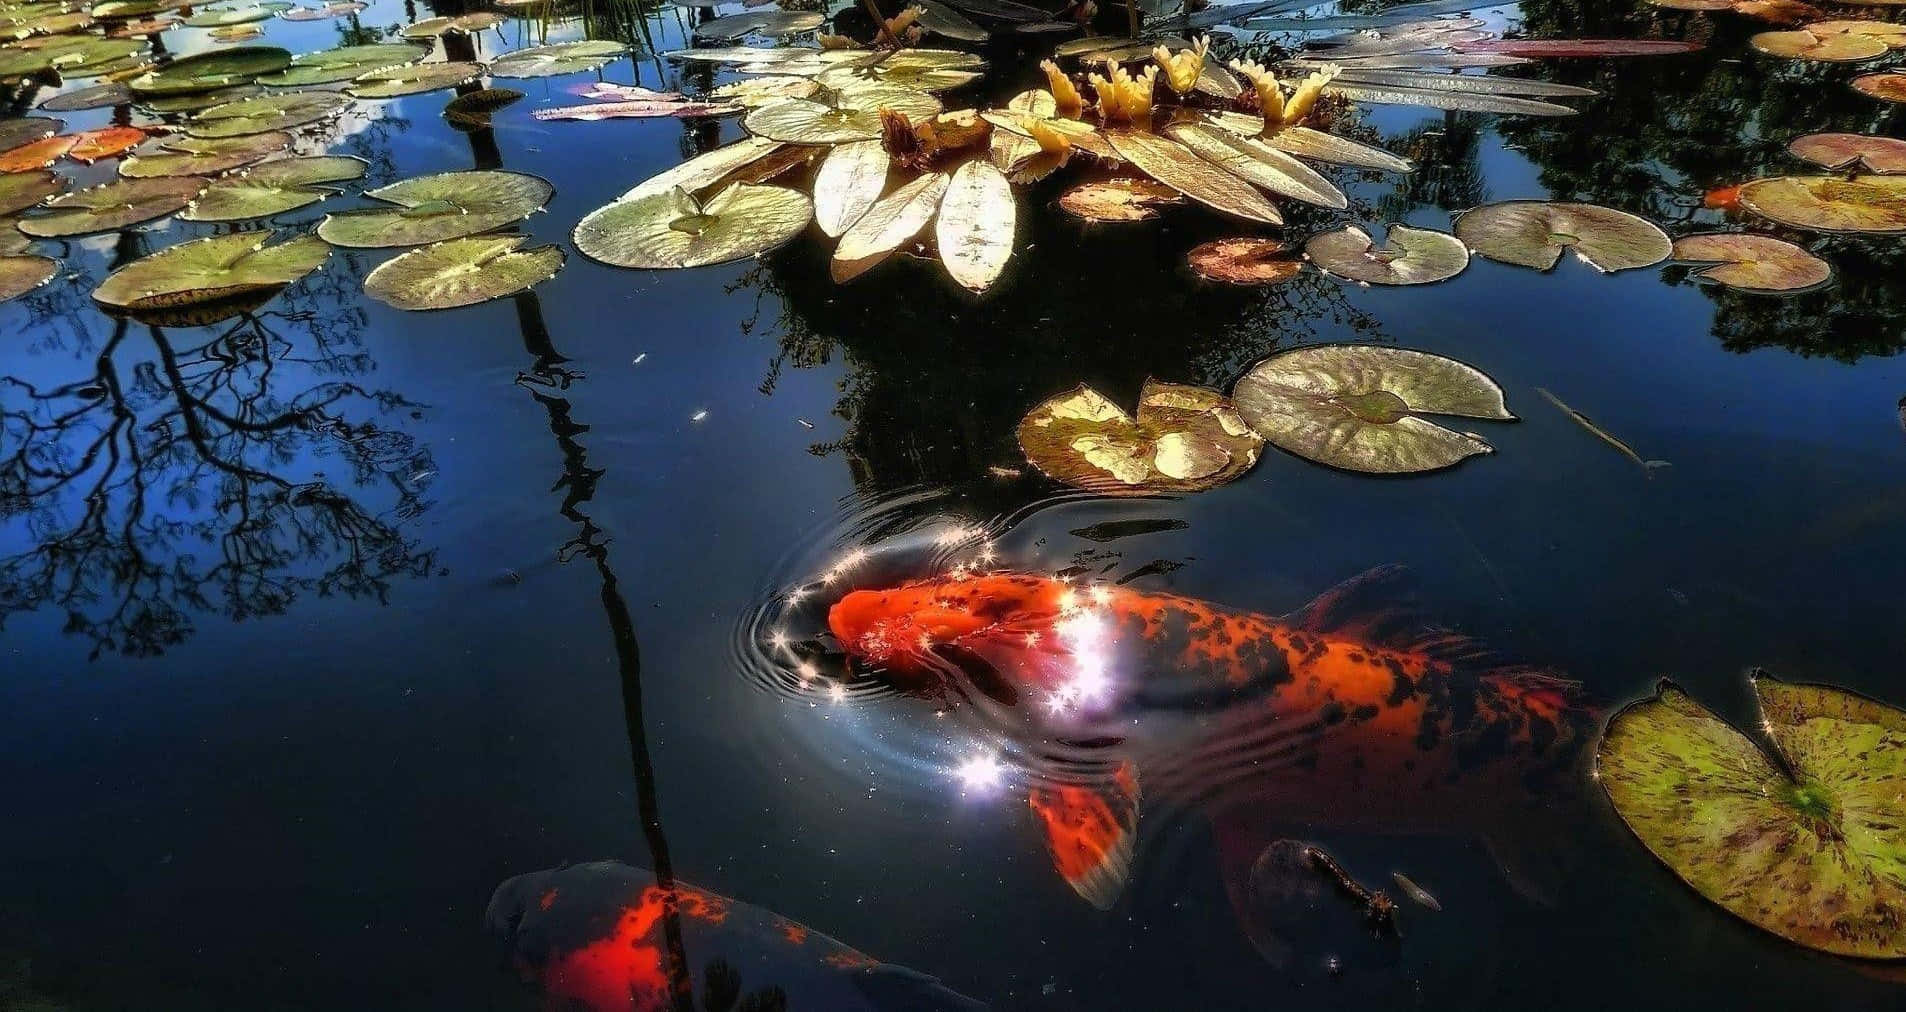 Enjoy the Beauty of a Peaceful Pond